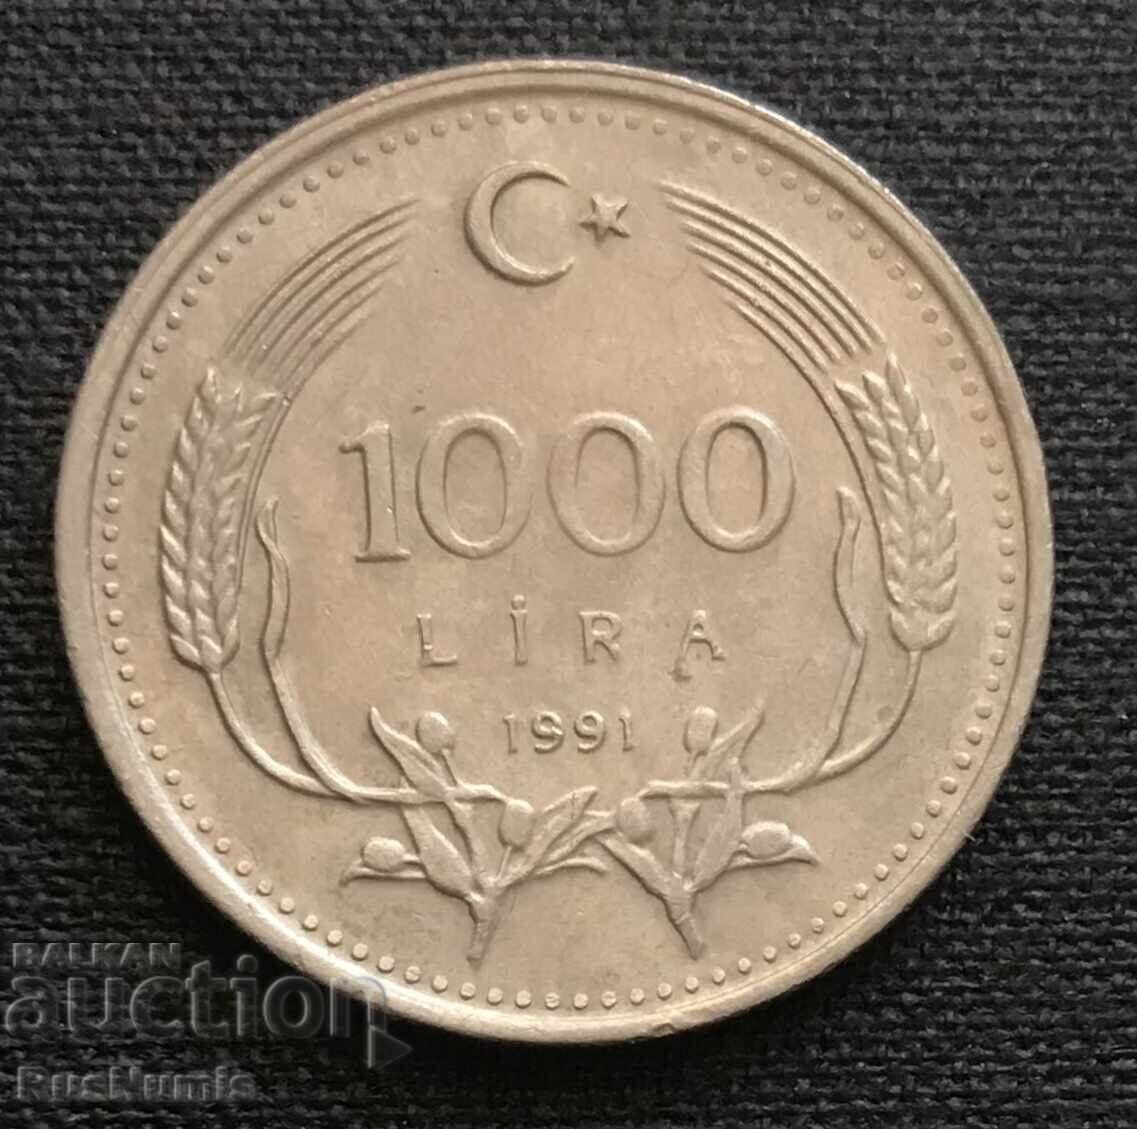 Турция.  1 000 лири 1991 г.